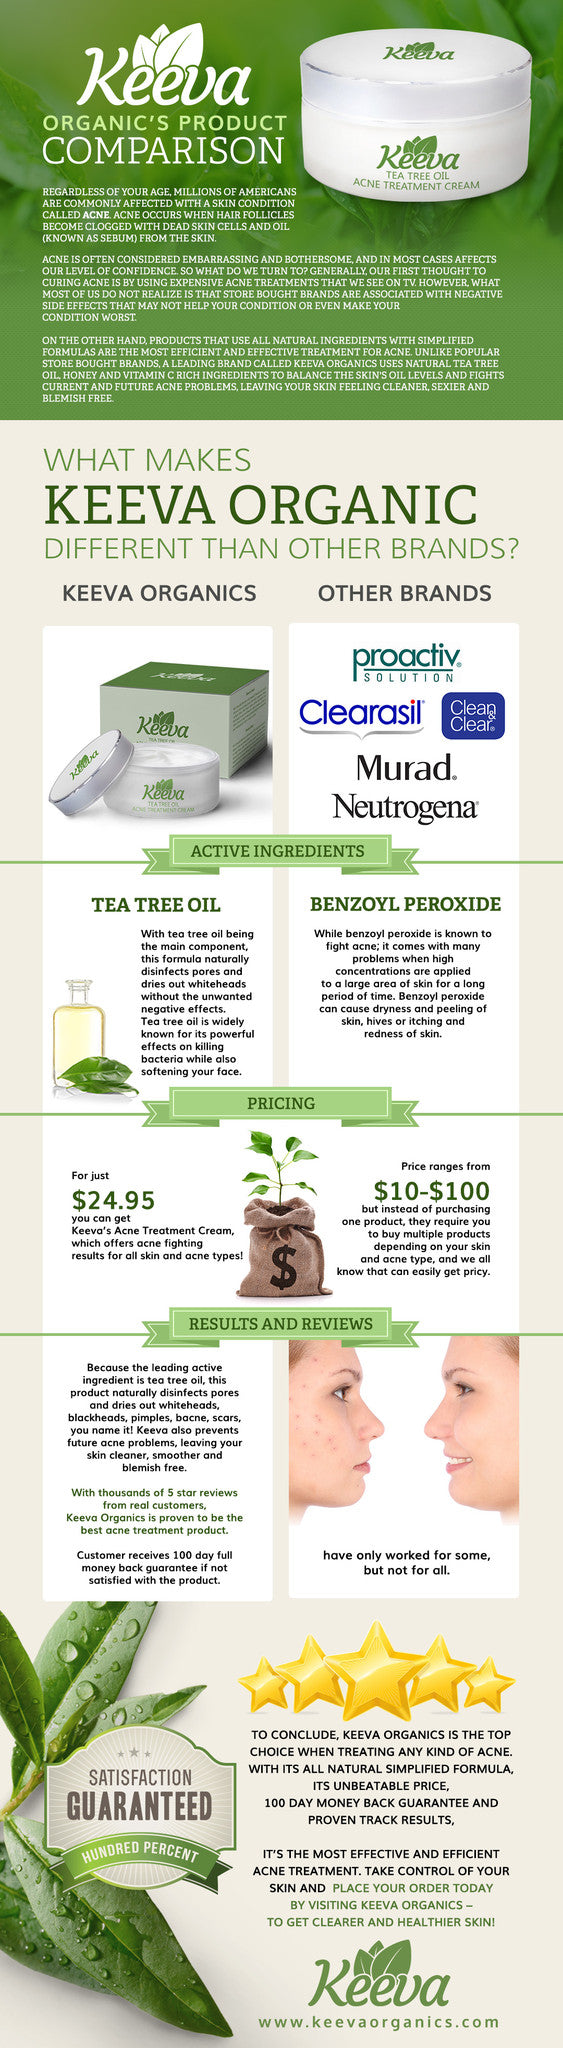 Keeva Organic Product Comparison Infographic